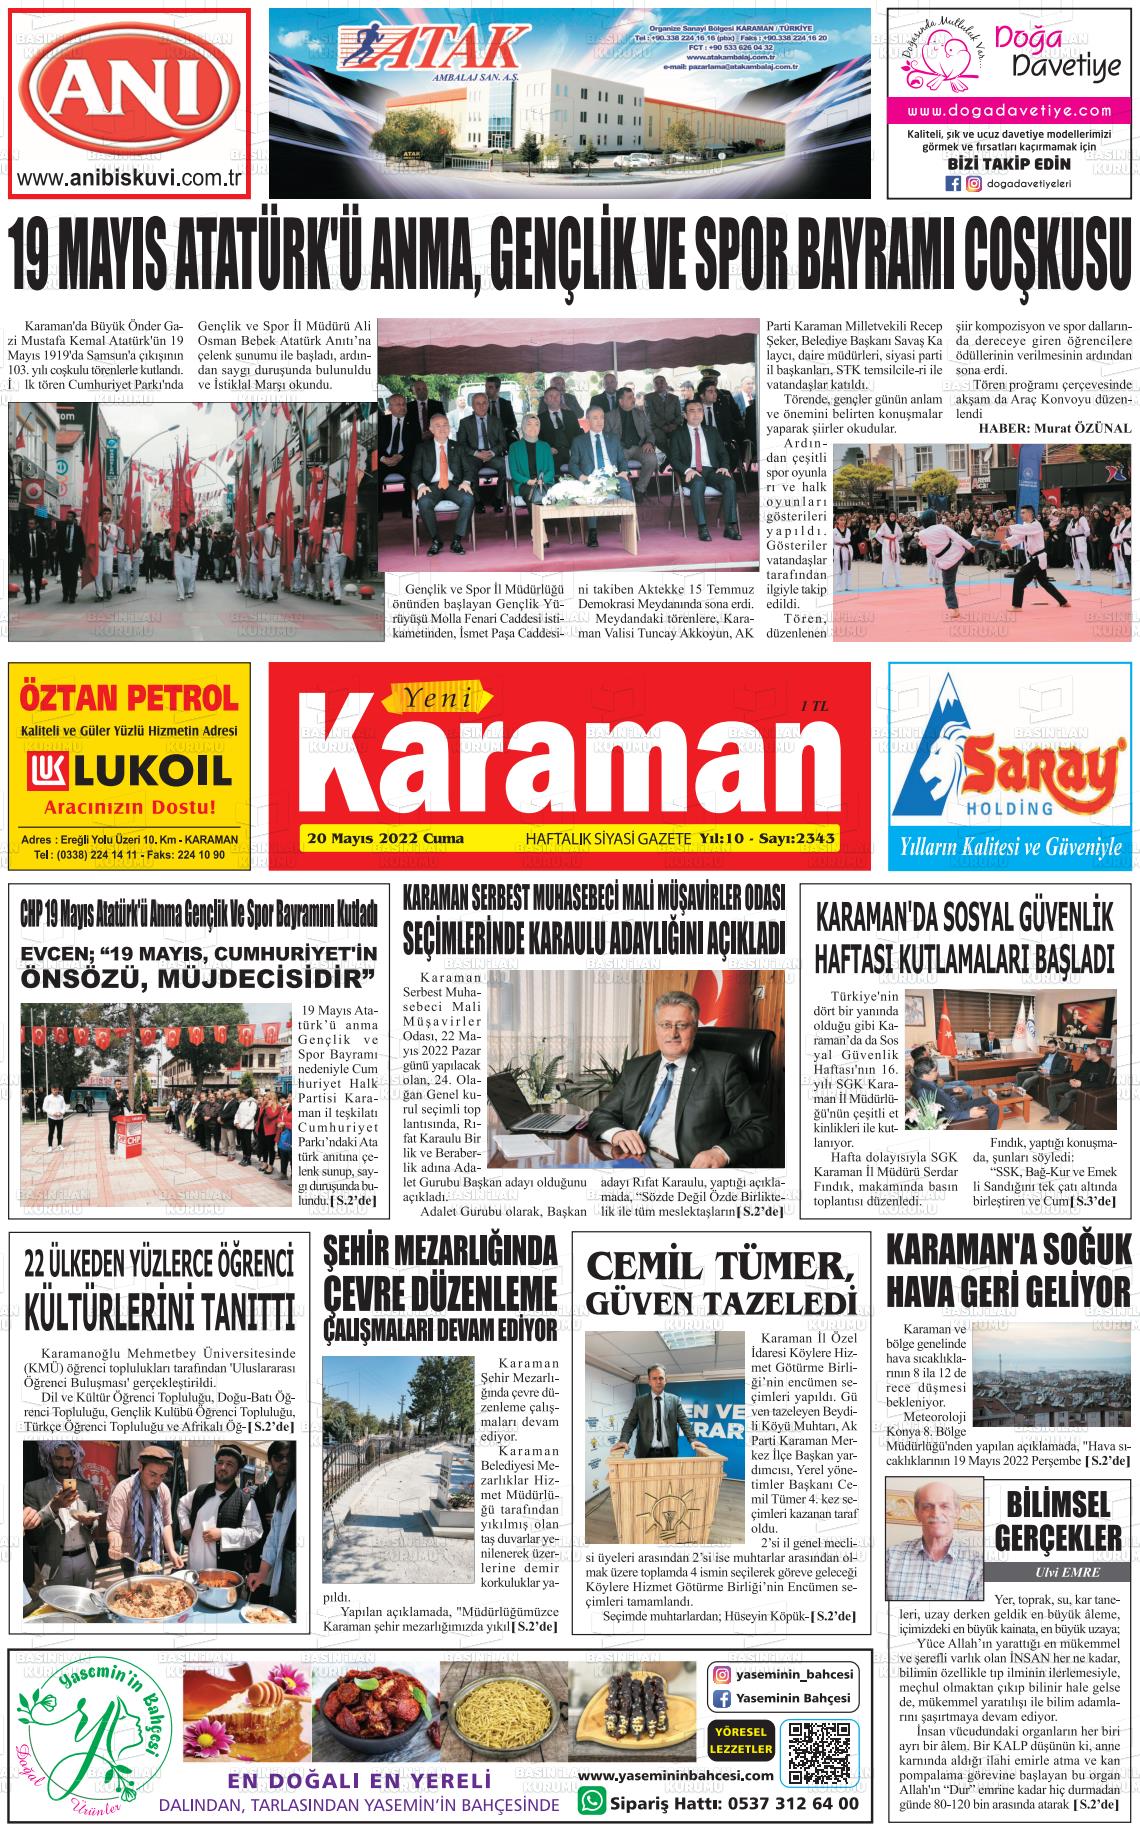 20 Mayıs 2022 Yeni Karaman Gazete Manşeti